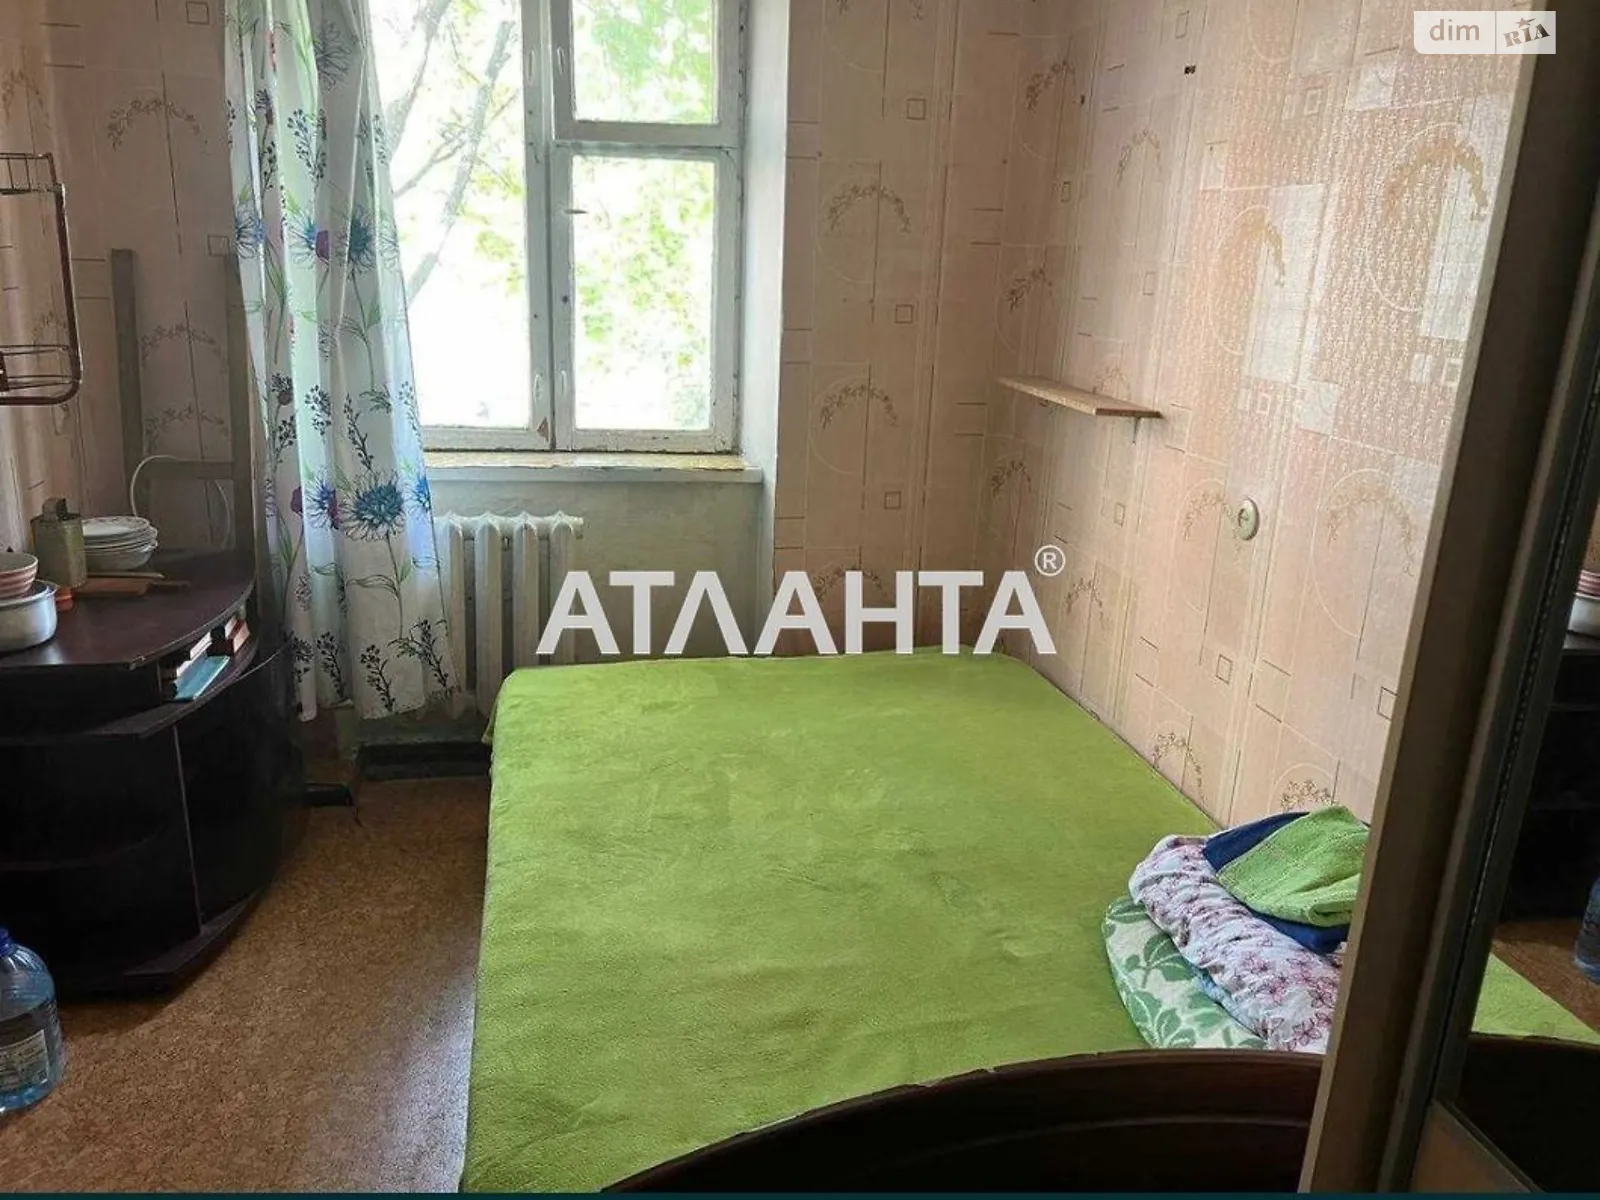 Продается комната 60 кв. м в Одессе, цена: 6700 $ - фото 1